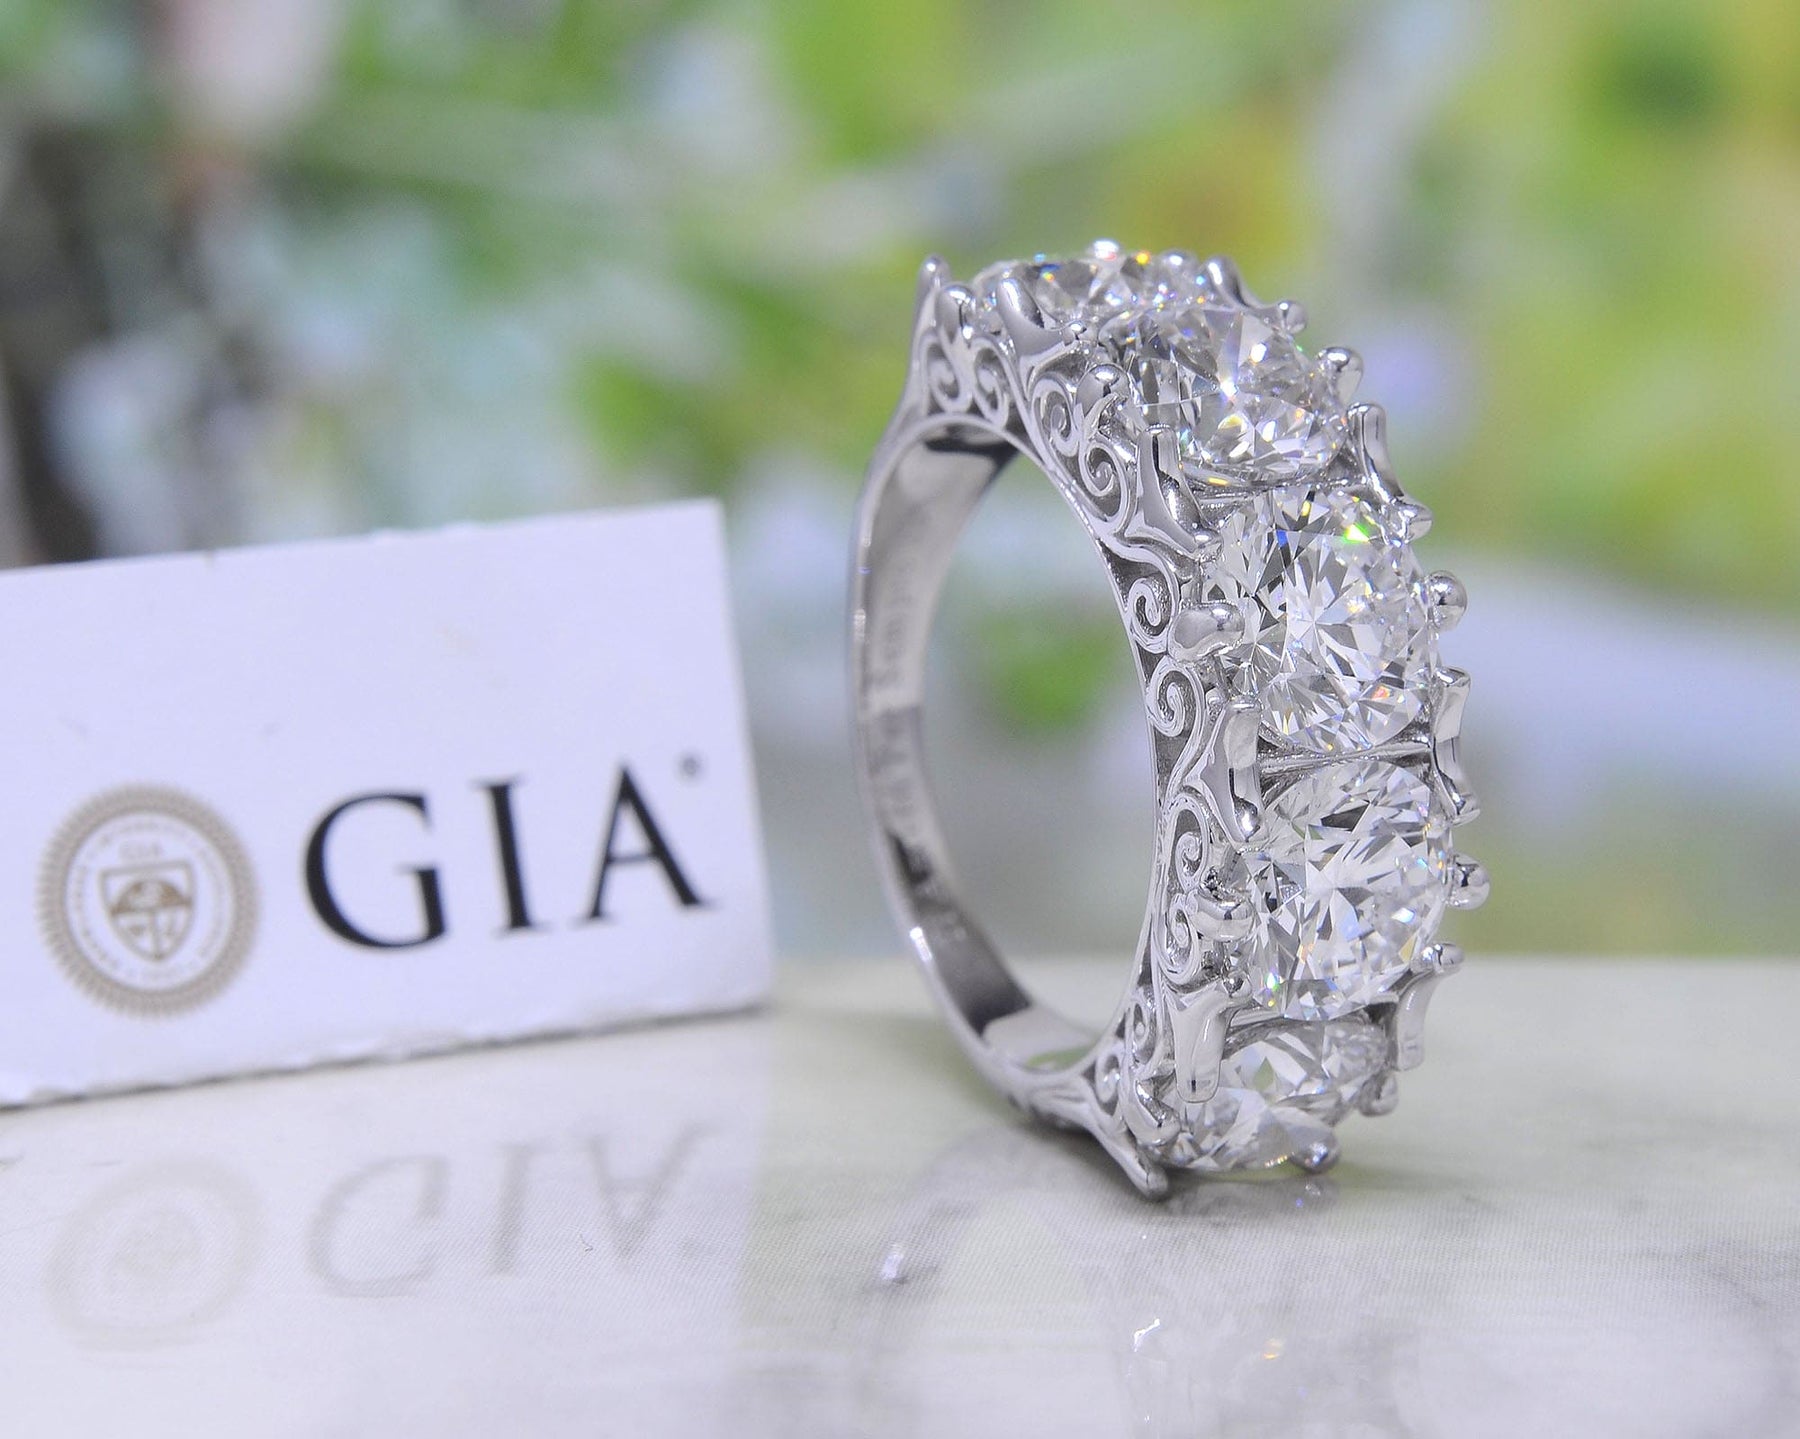 Buy Beautiful Textured Diamond Ring Online | ORRA